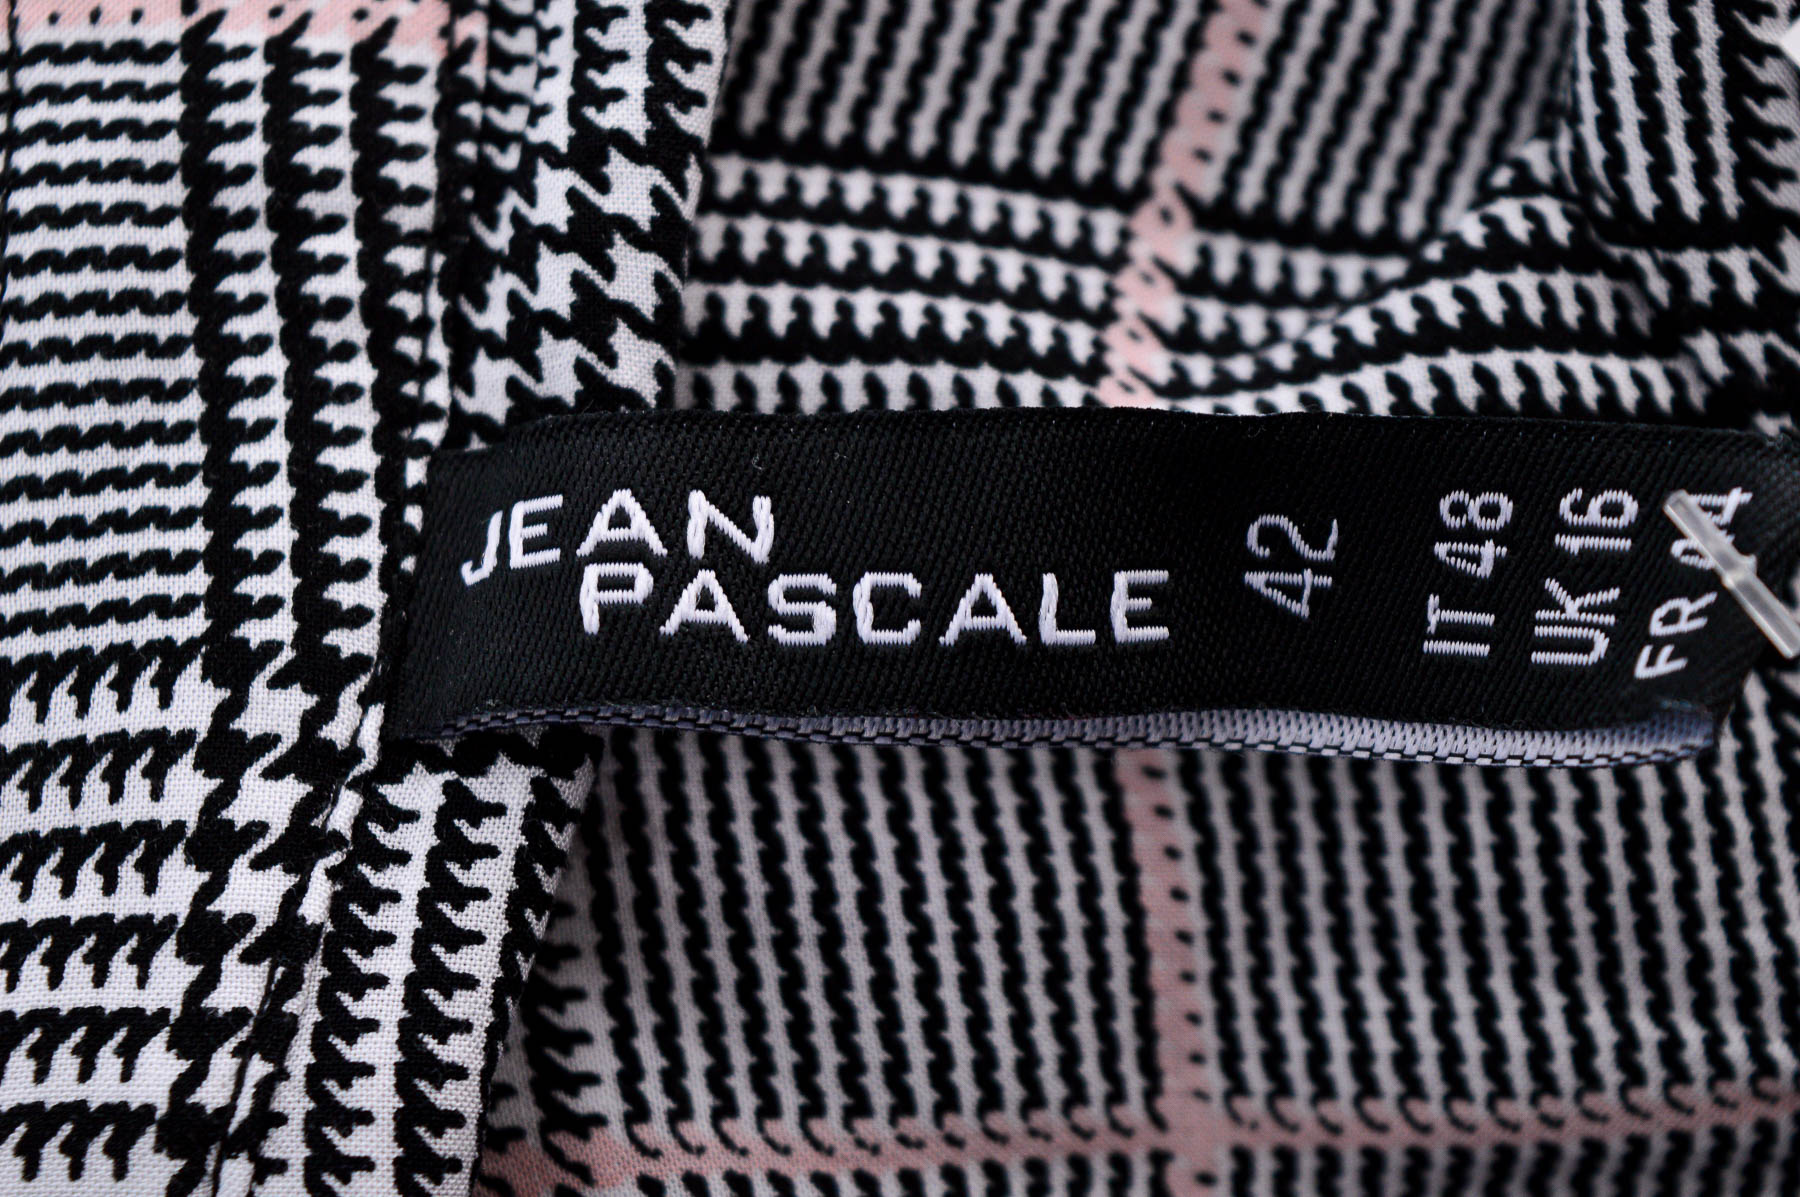 Дамска риза - Jean Pascale - 2